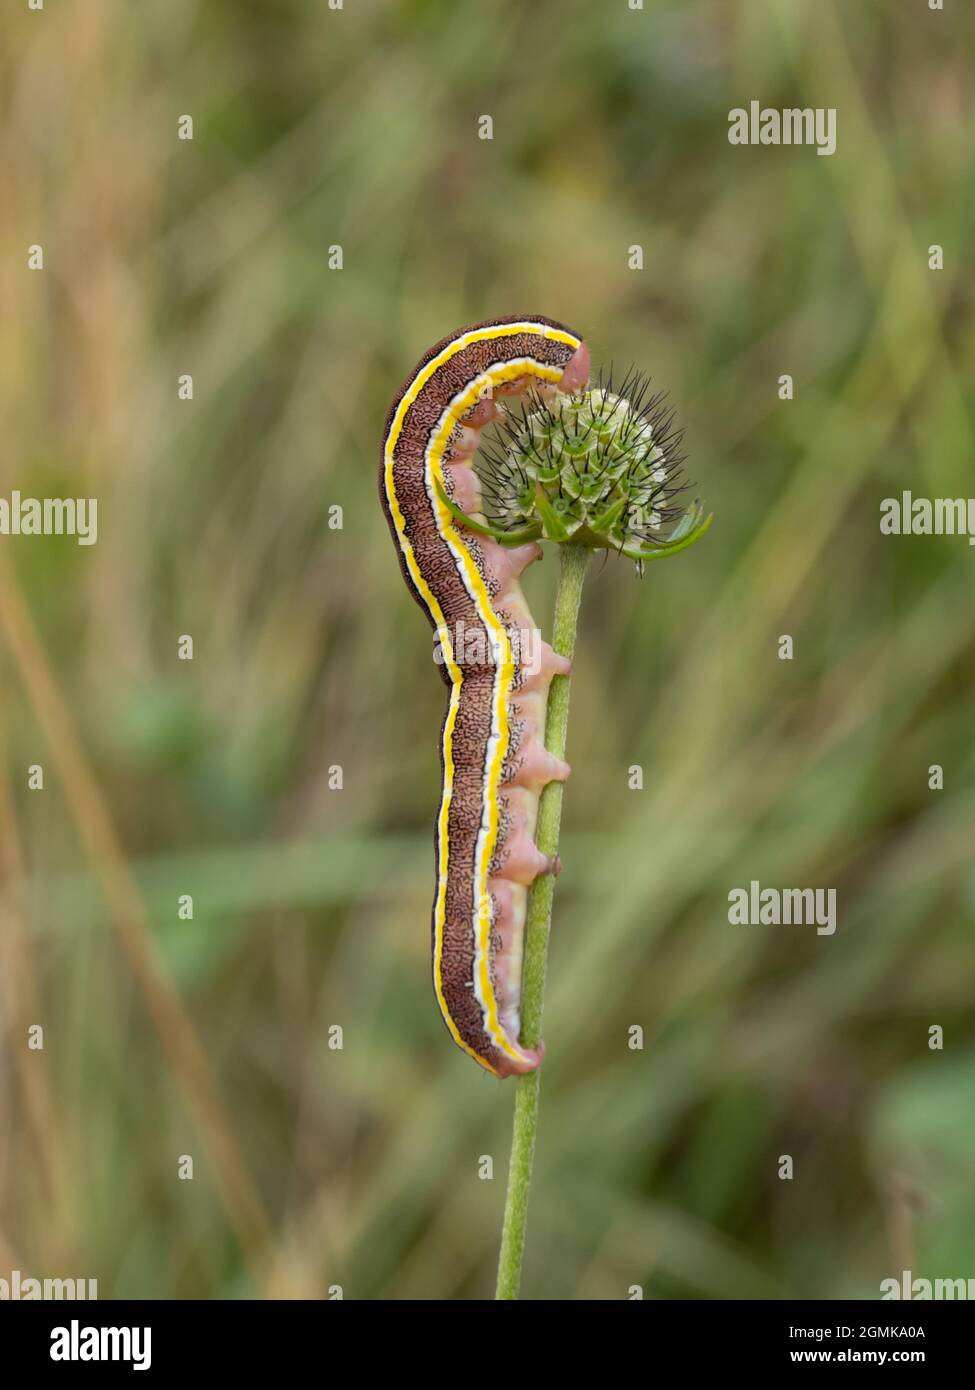 The caterpillar or larvae of a Broom Moth, Ceramica pisi, feeding on a plant stem. Stock Photo